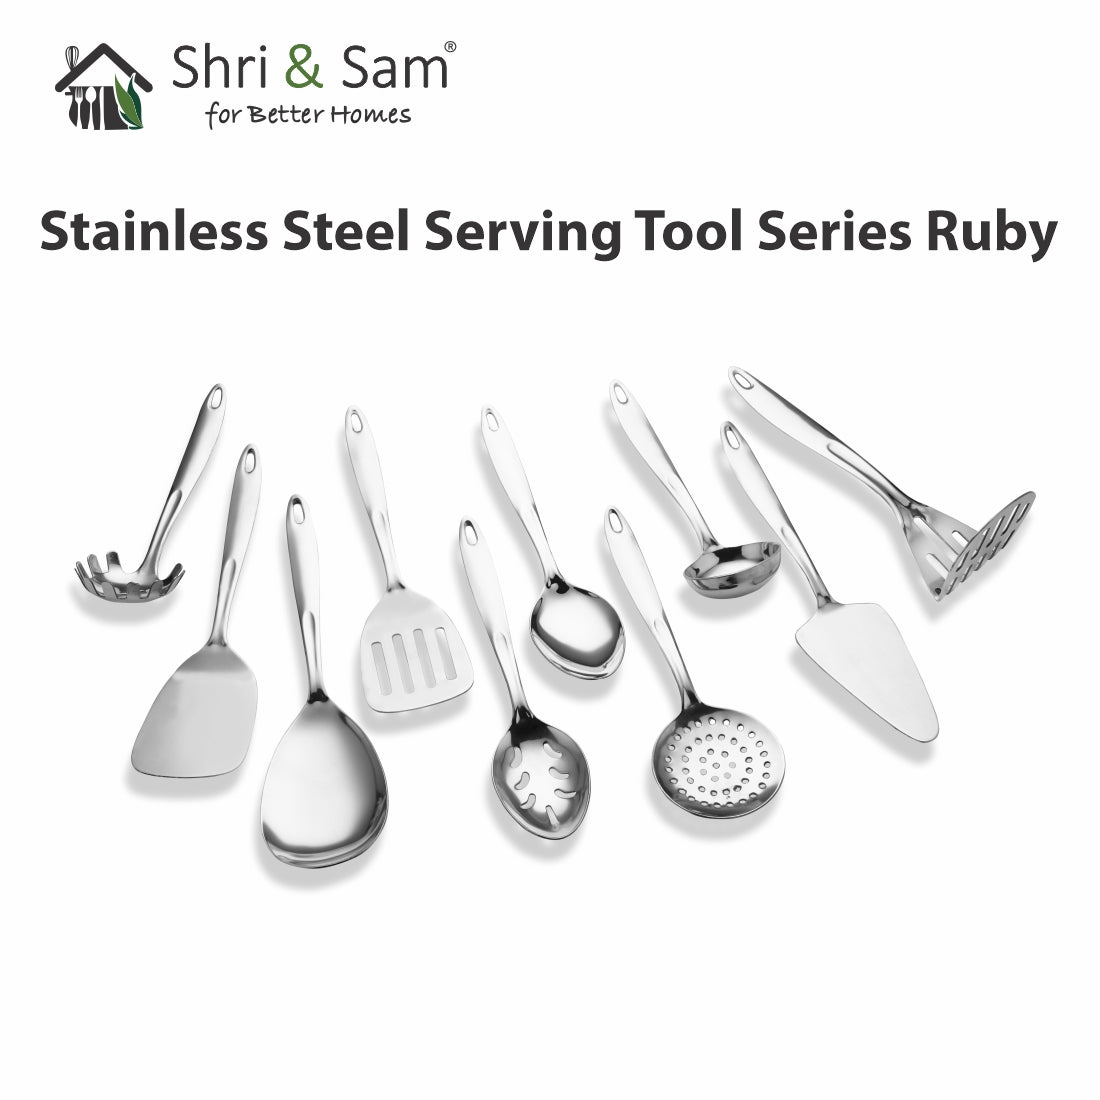 Stainless Steel Serving Tool Series Ruby